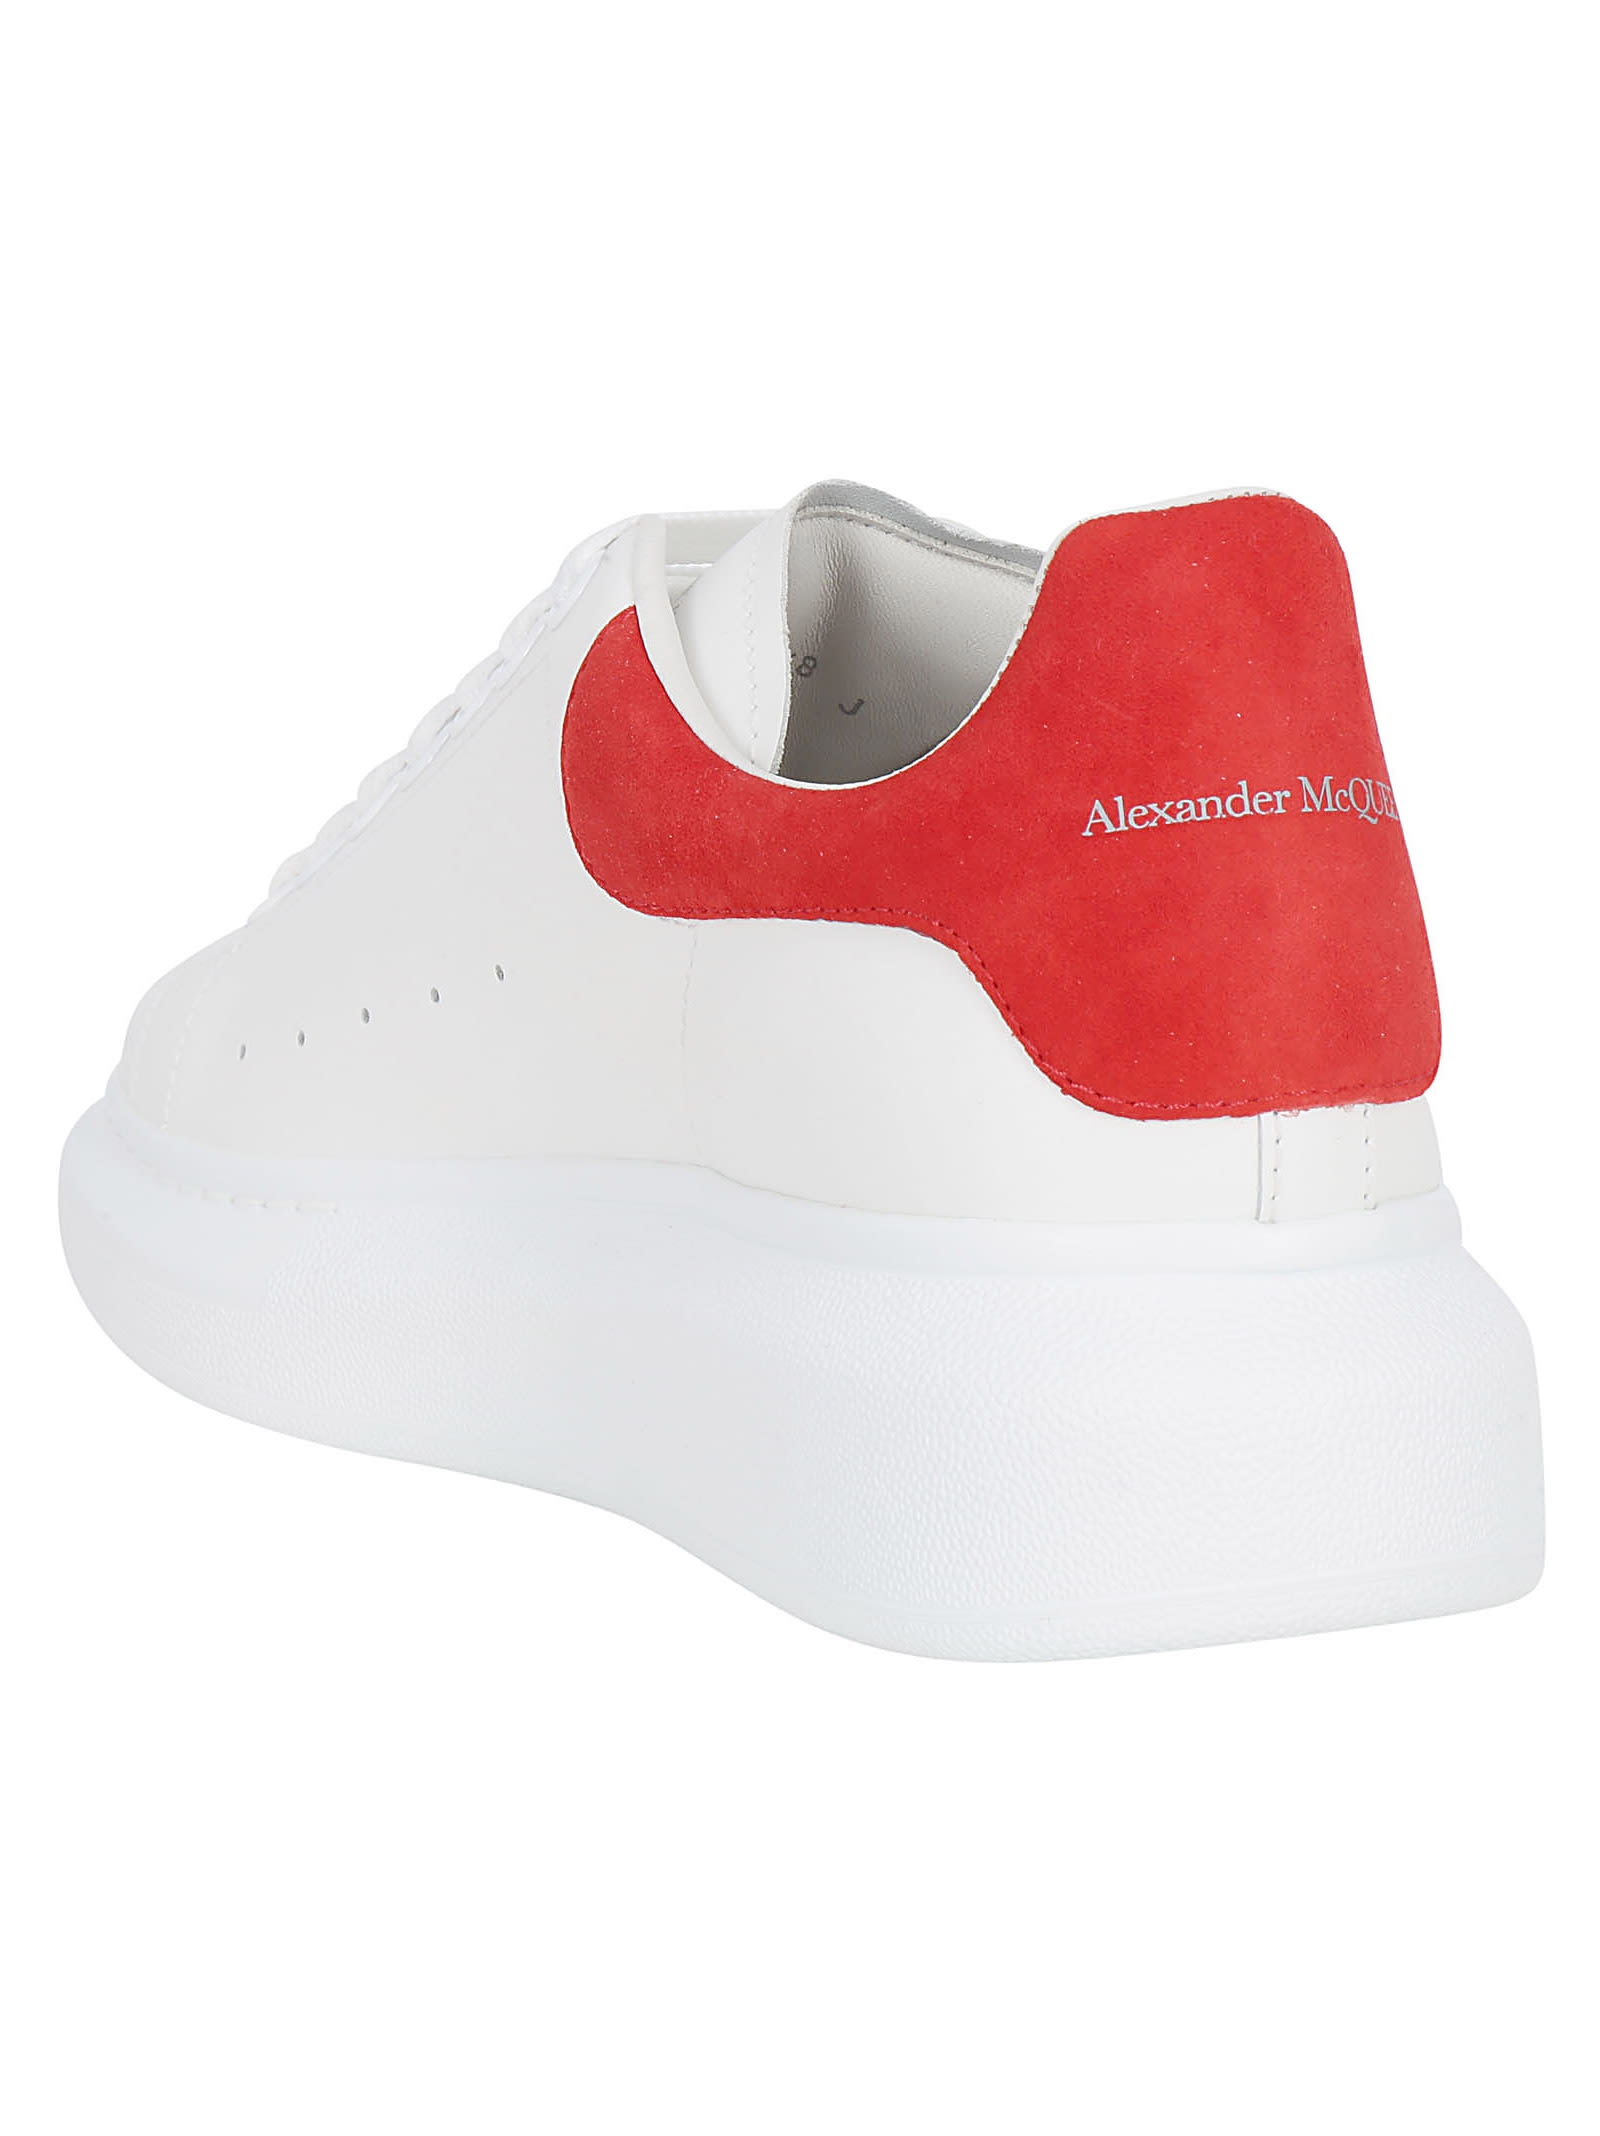 Buy Alexander McQueen Oversized Low-top Sneakers online, shop Alexander McQueen shoes with free shipping